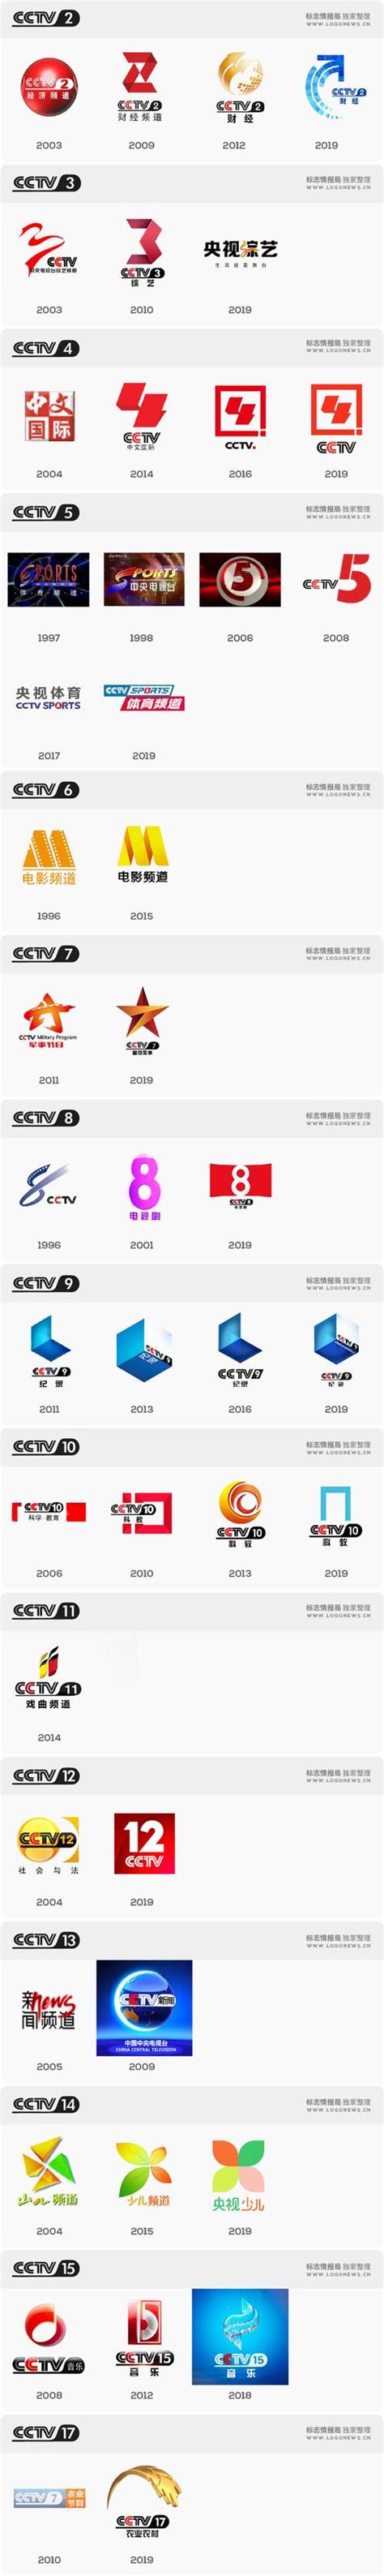 CCTV-8（中央电视台电视剧频道）_素材中国sccnn.com